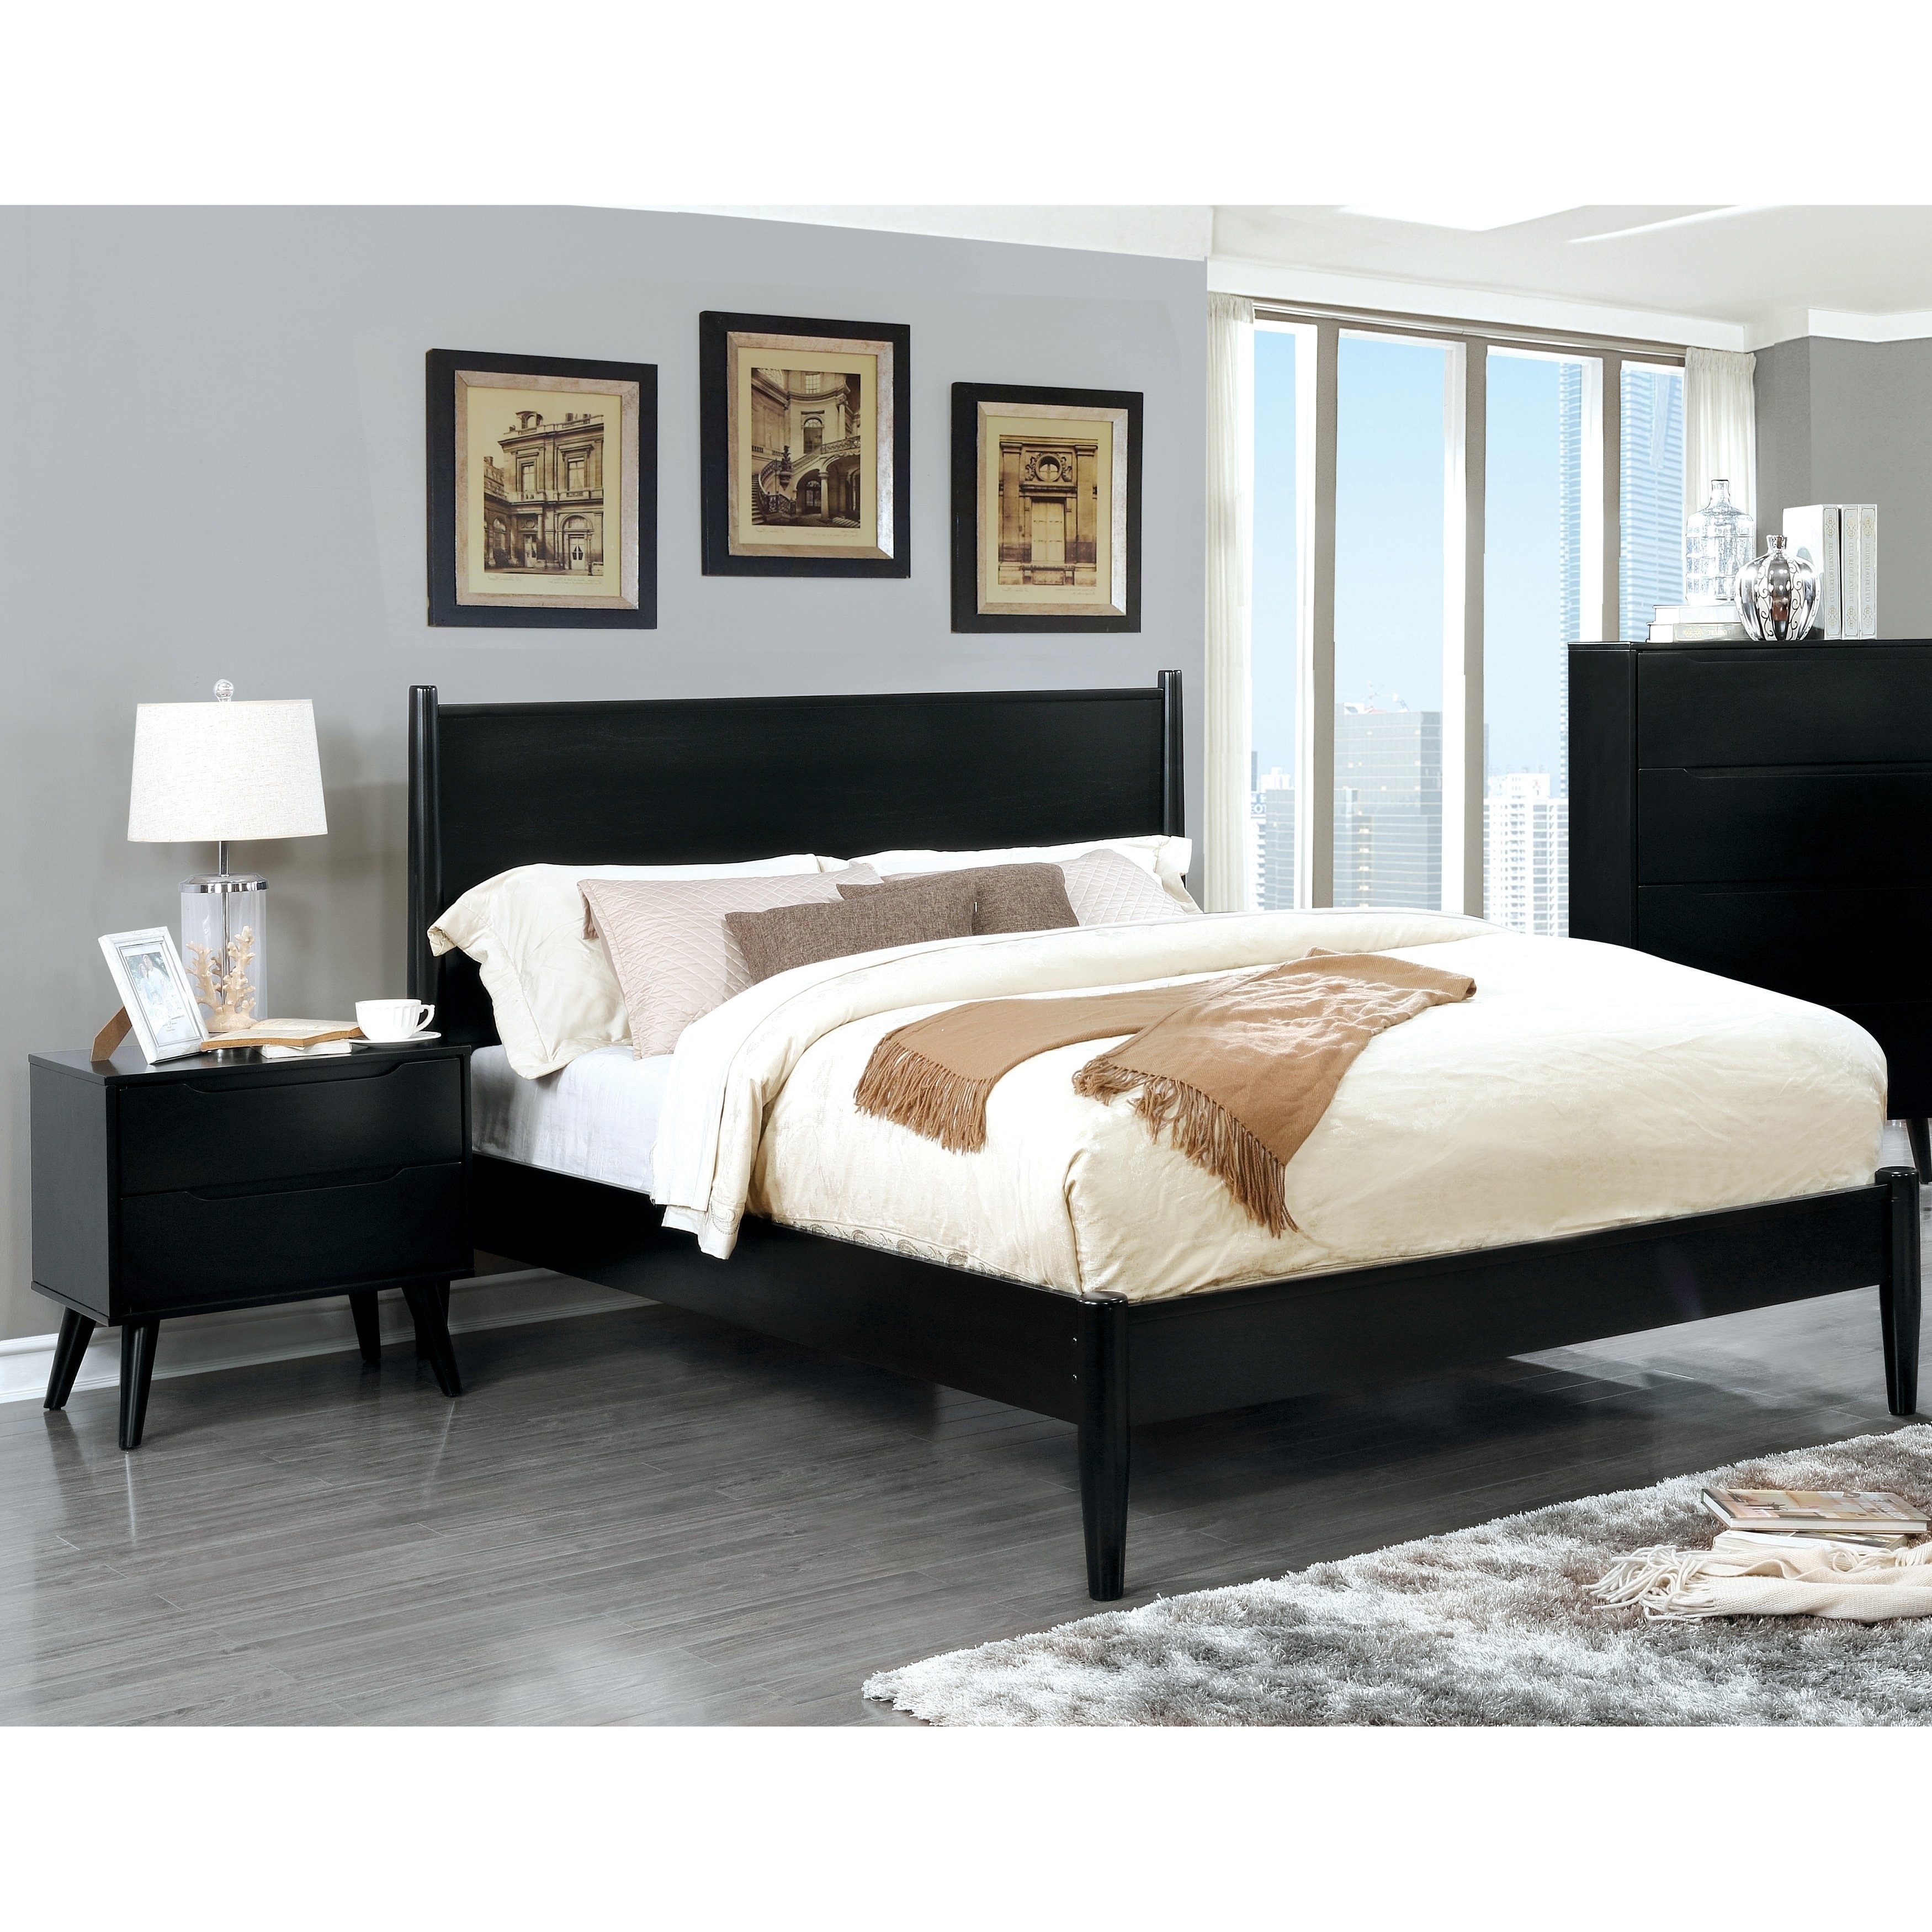 Furniture Of America Fopp Mid Century Black 2 Piece Bedroom Set